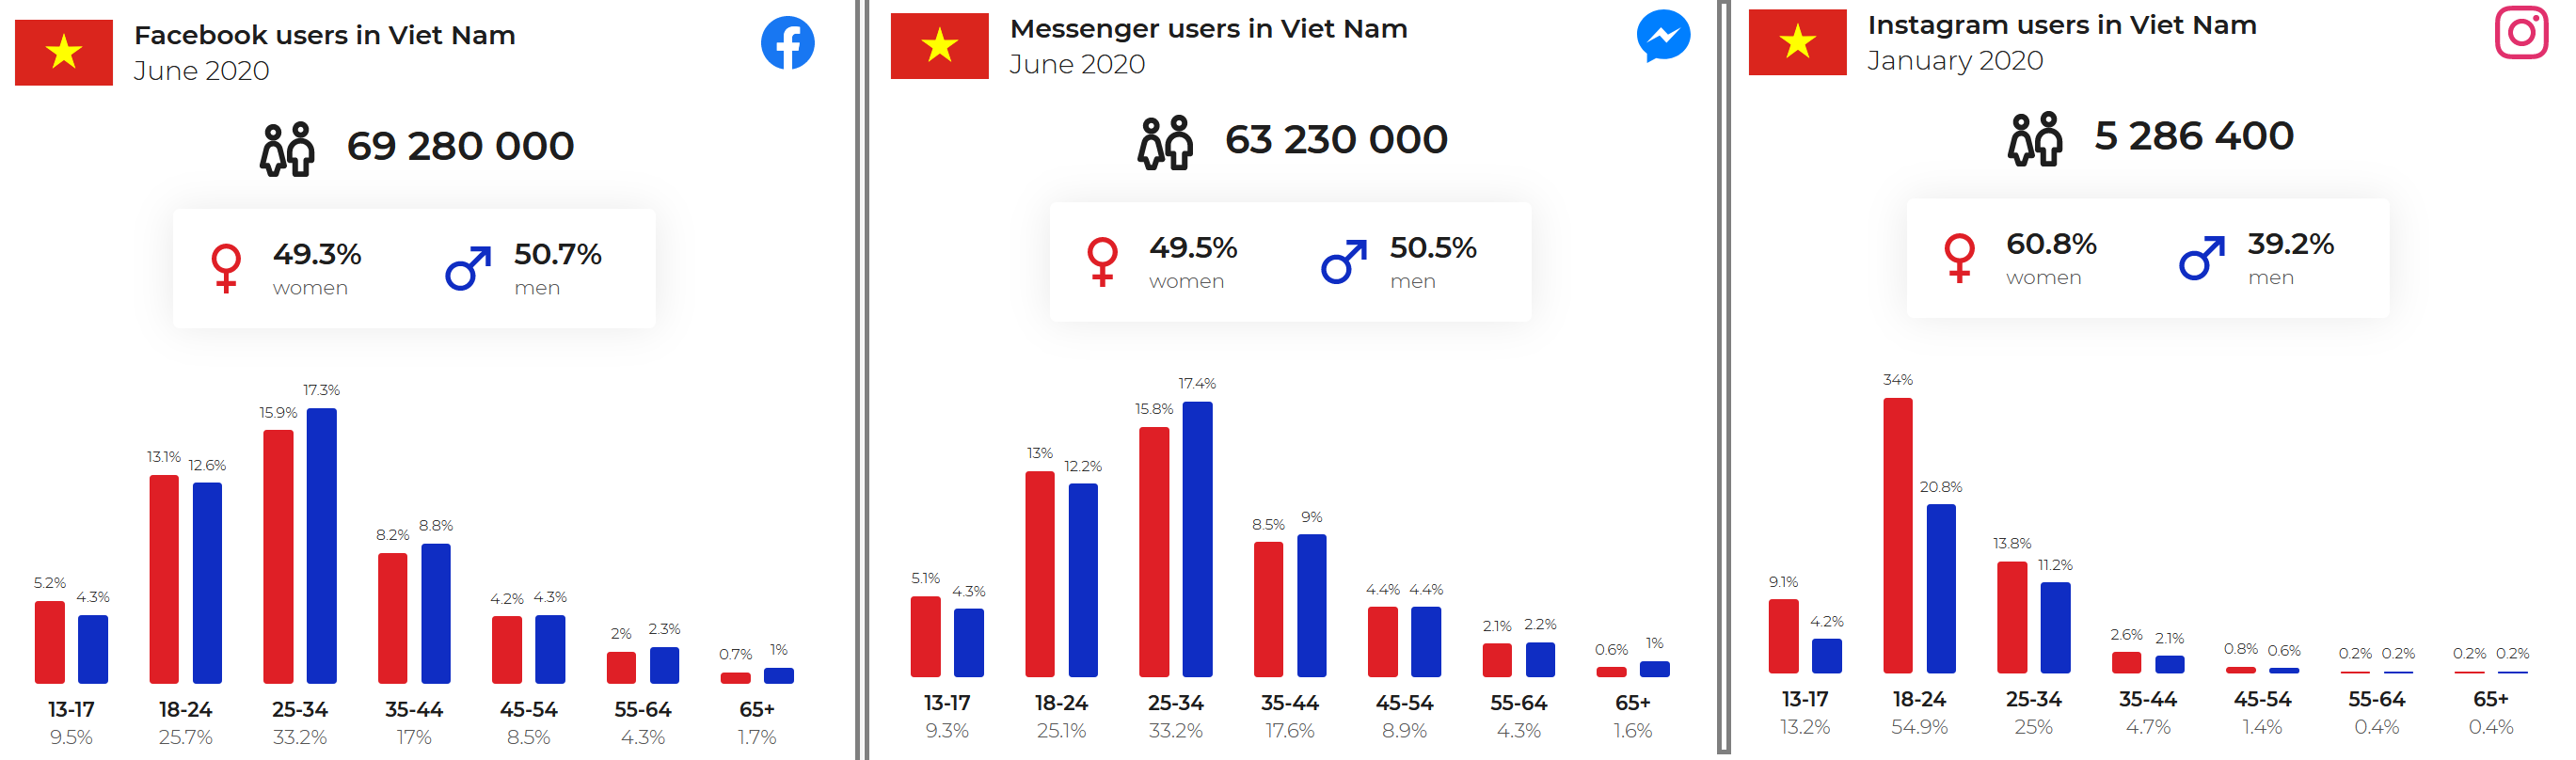 thong-ke-nguoi-dung-facebook-vietnam-2020